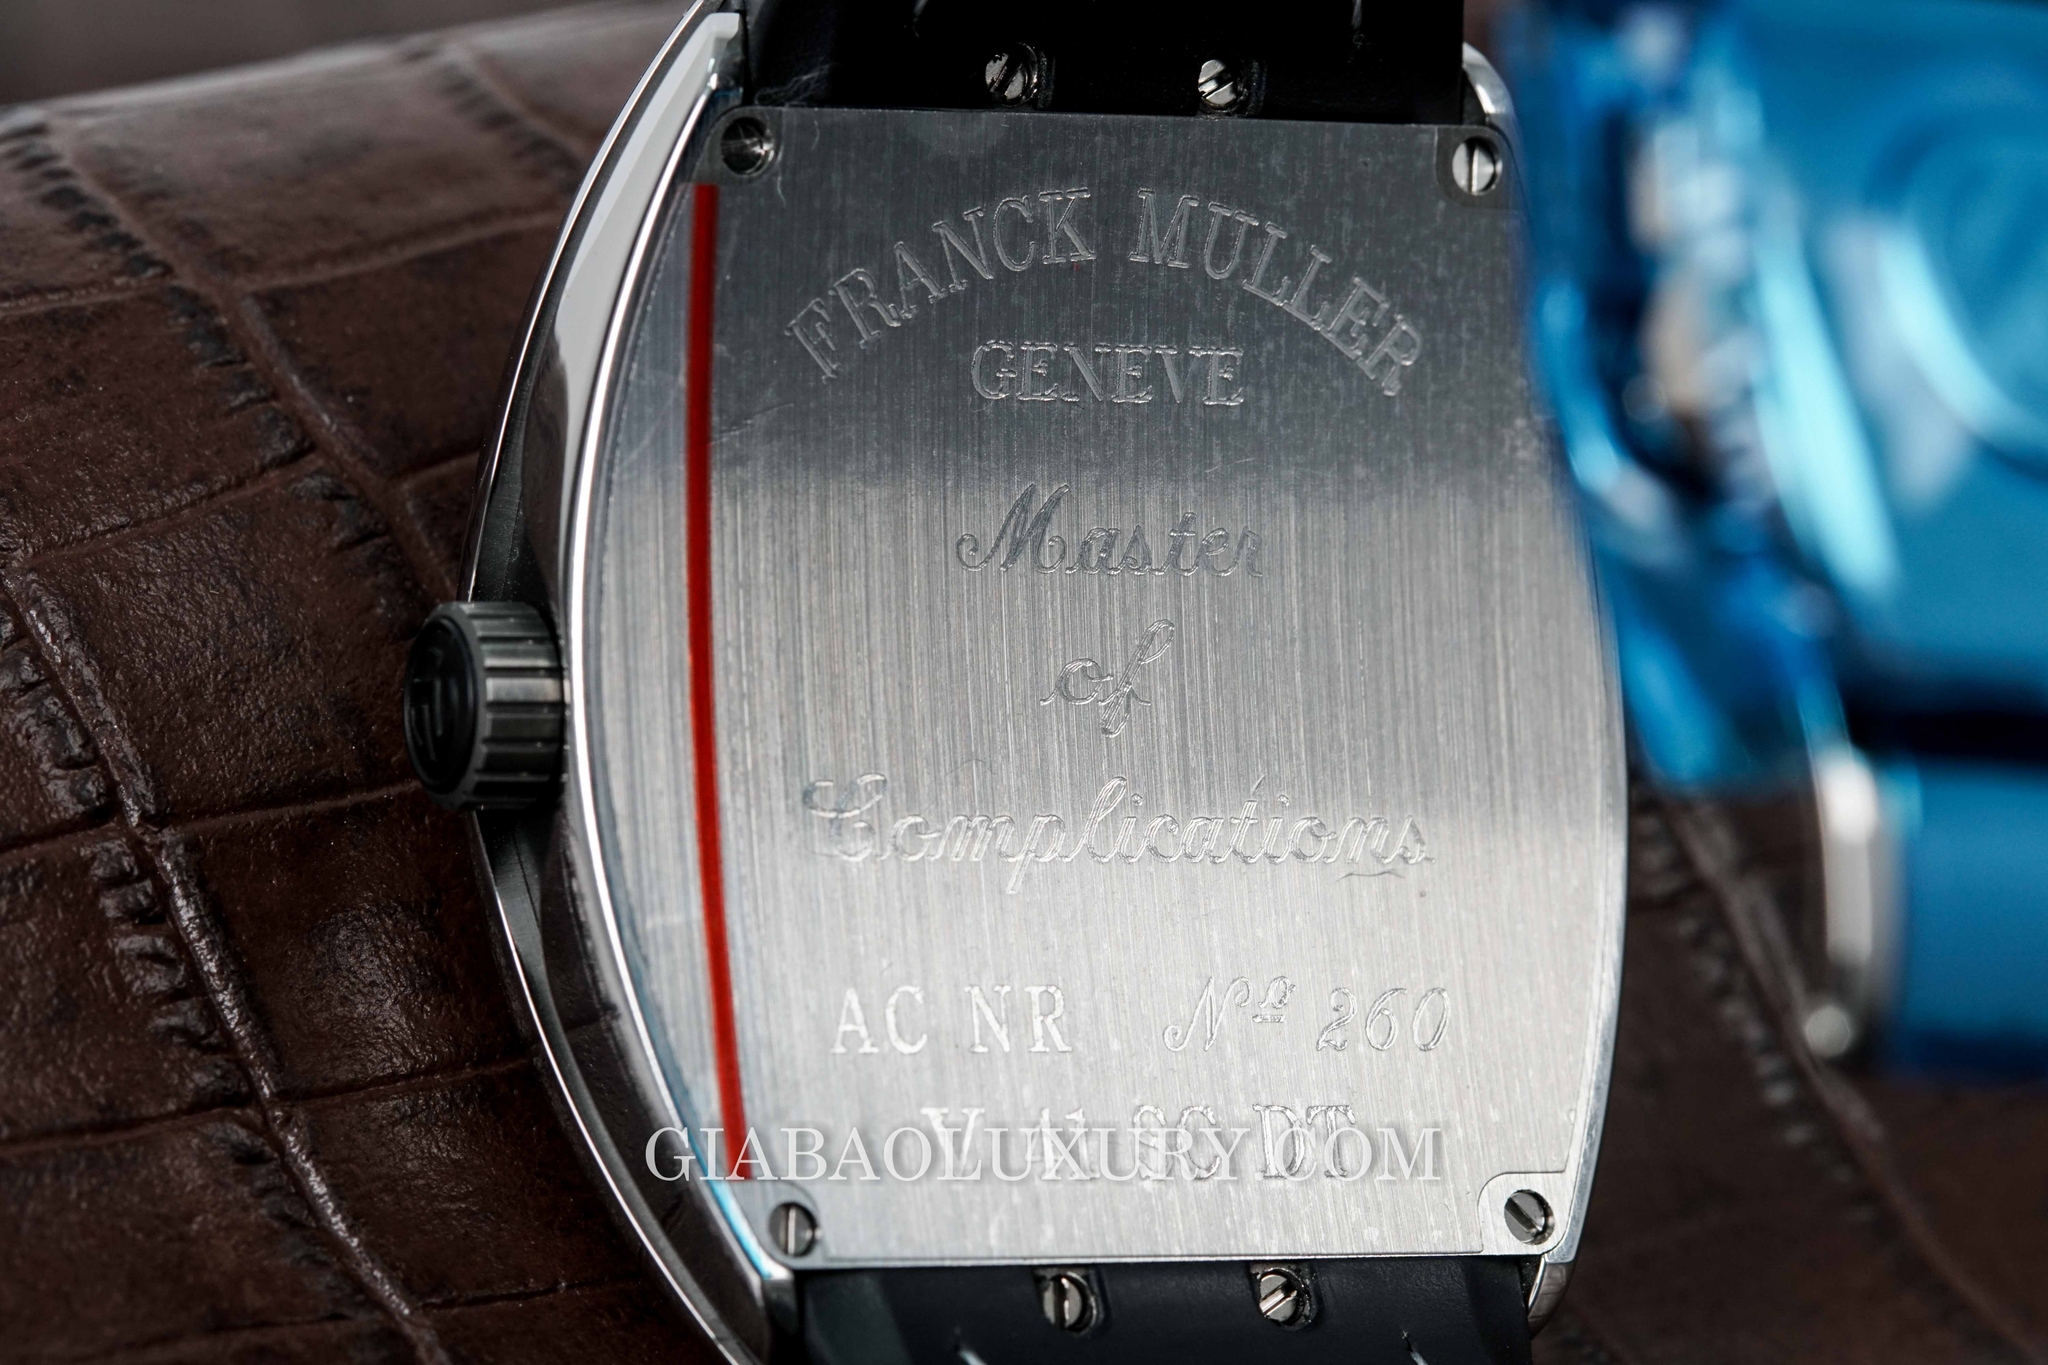 đồng hồ Franck Muller Vanguard